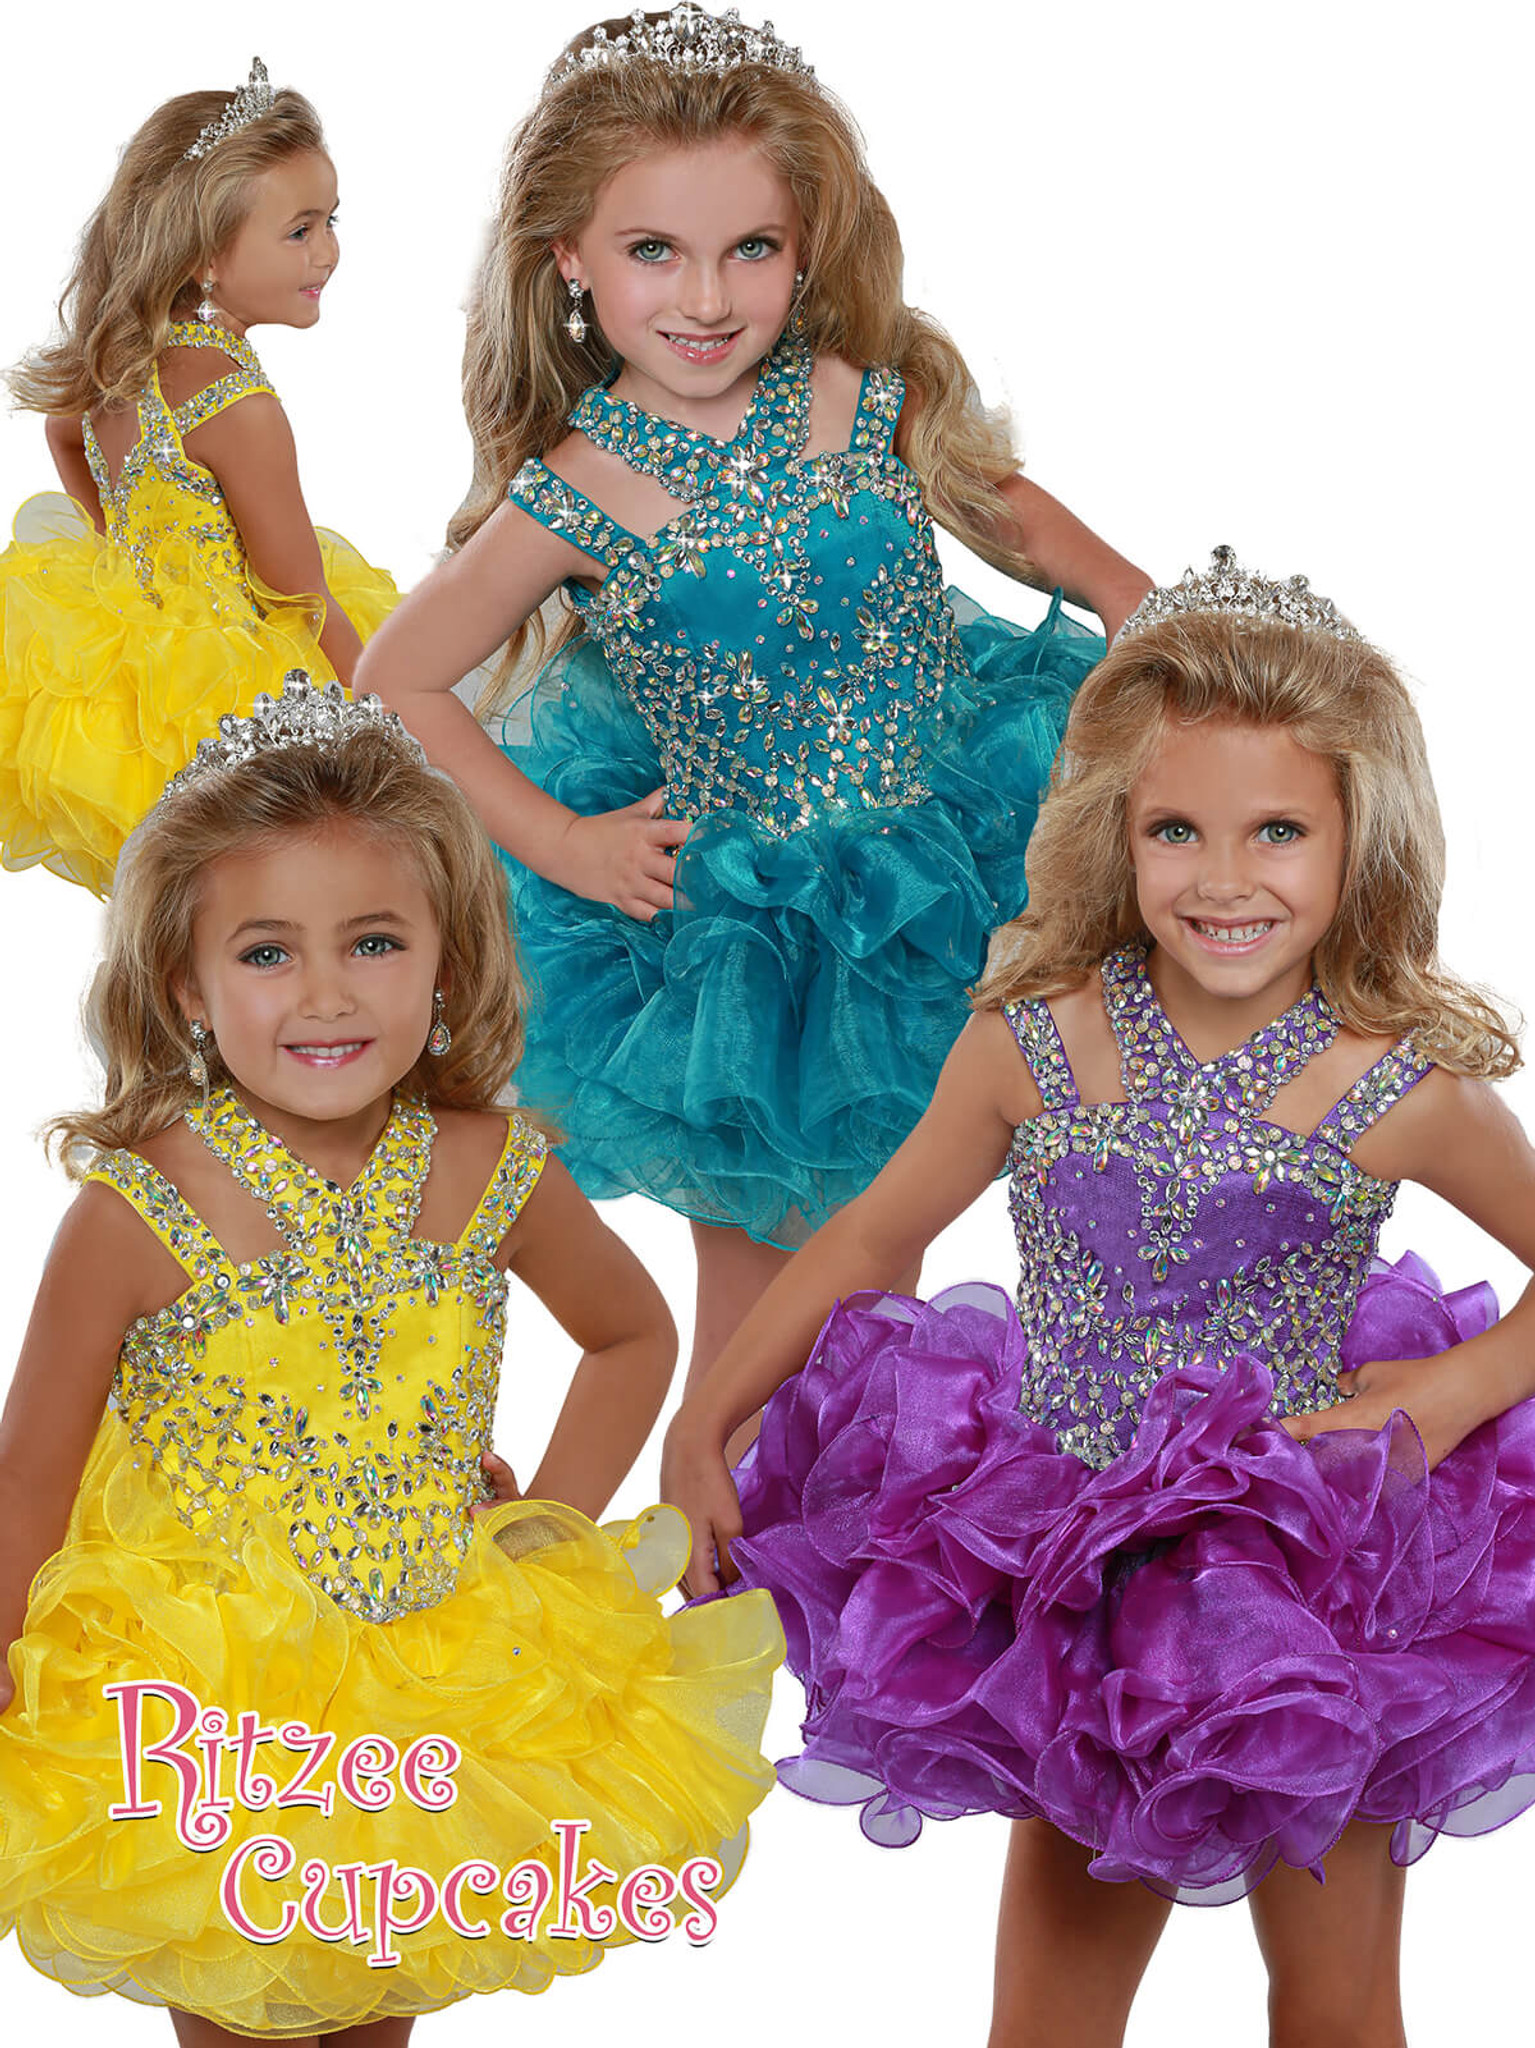 Cupcake Ritzee Girls B279 Pageant Dress PageantDesigns